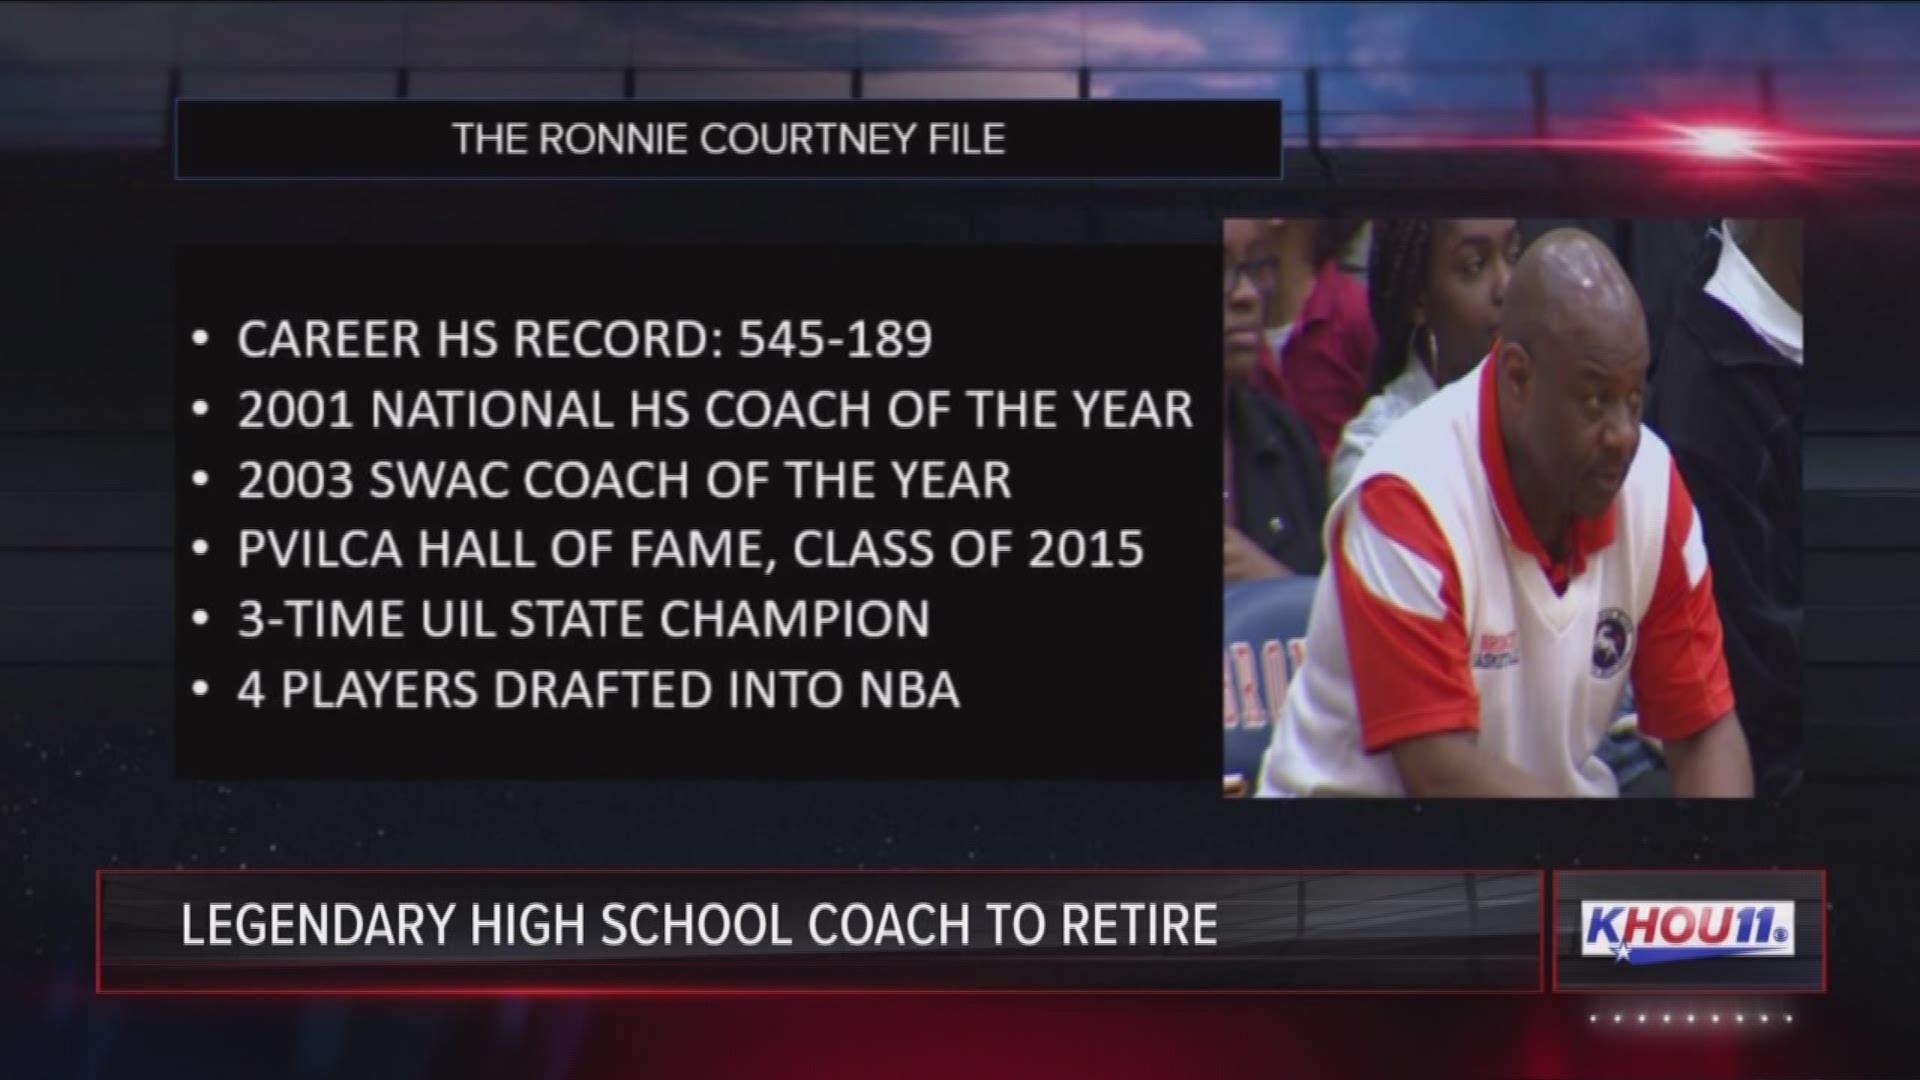 Legendary high school coach Ronnie Courtney to retire